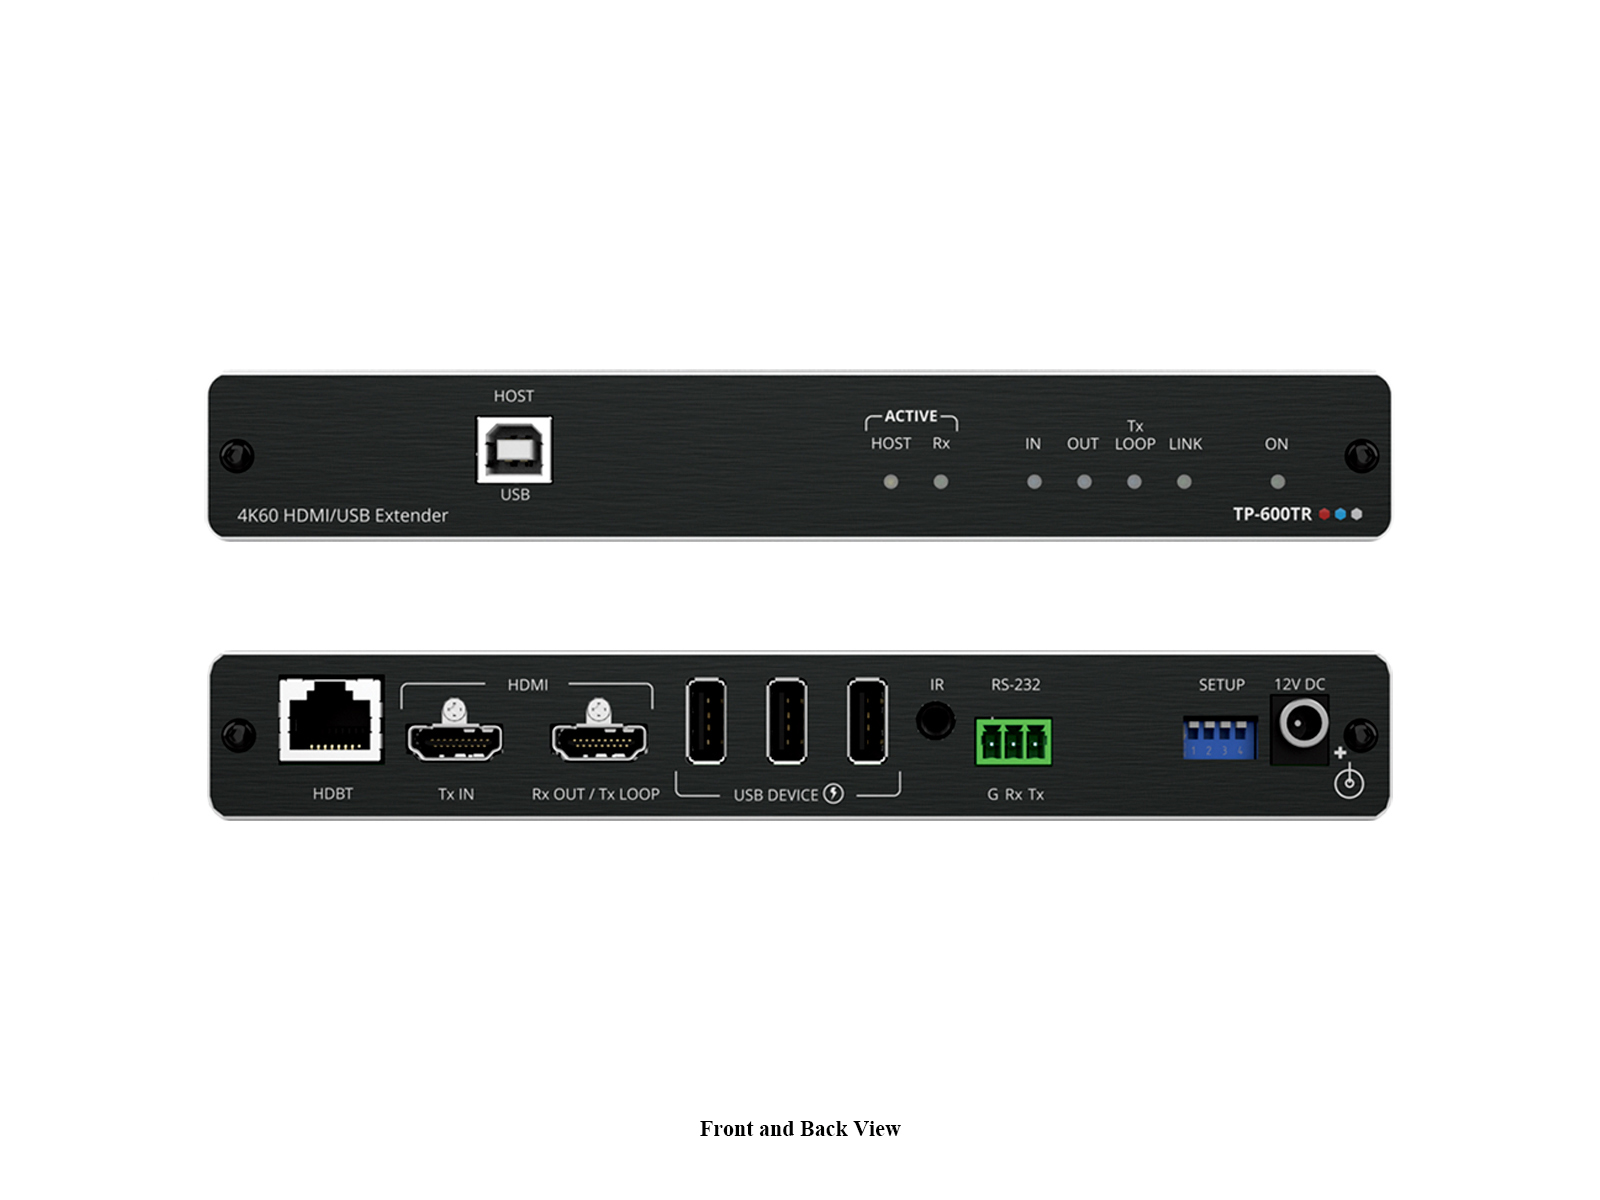 TP-600TR 4K60 4x4x4 HDMI Extender with USB/RS-232/IR over Long-Reach HDBaseT 3.0 by Kramer